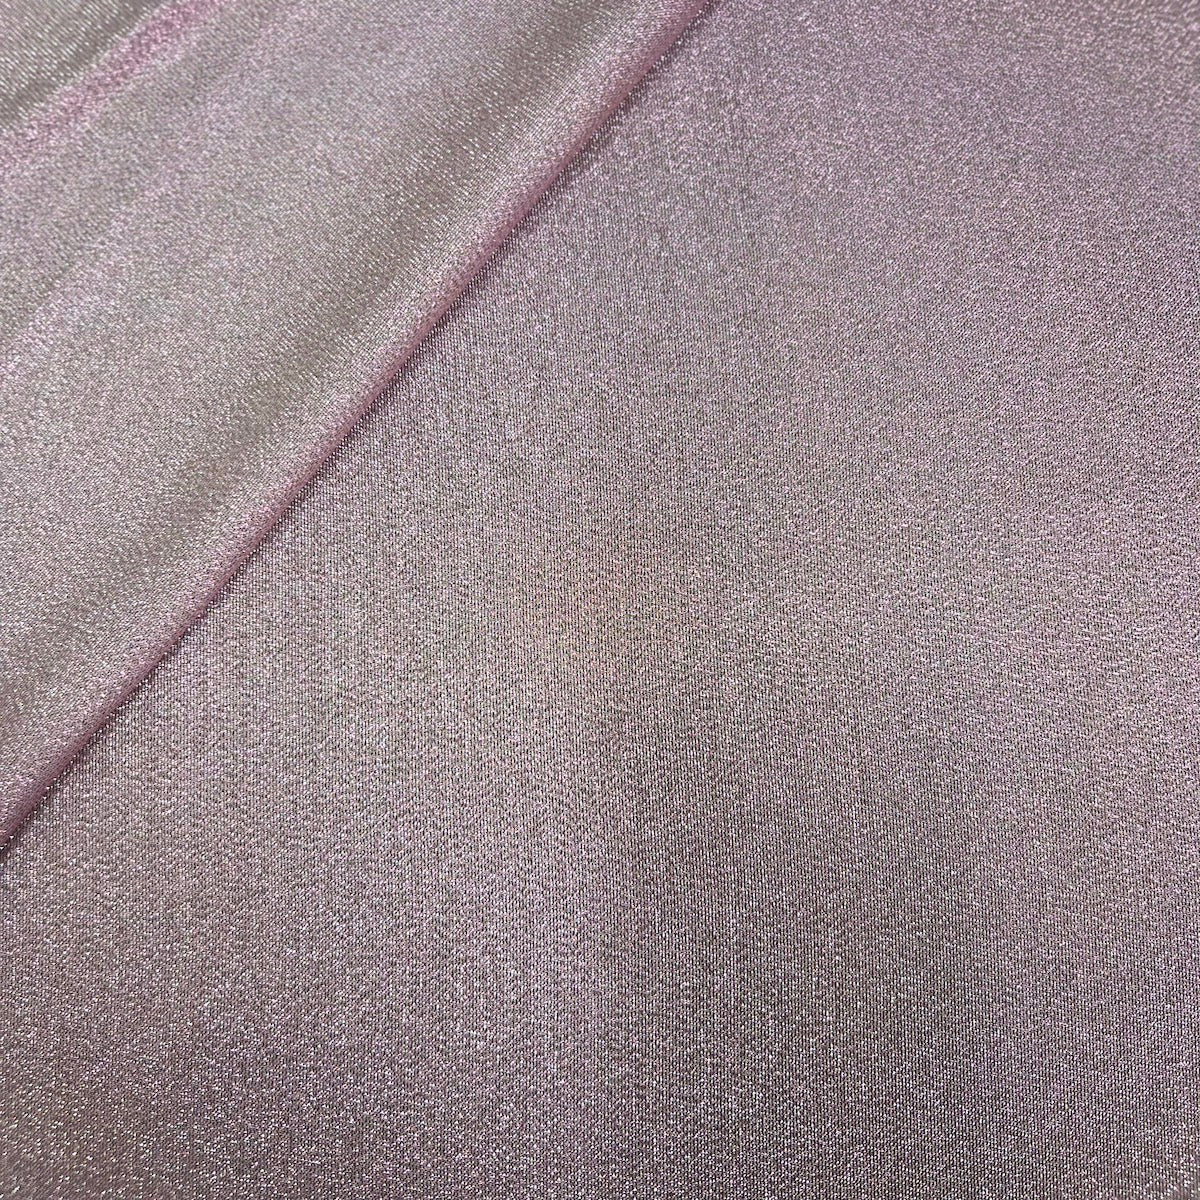 Pink | Silver Iridescent Glitter Lurex Faux Satin Fabric